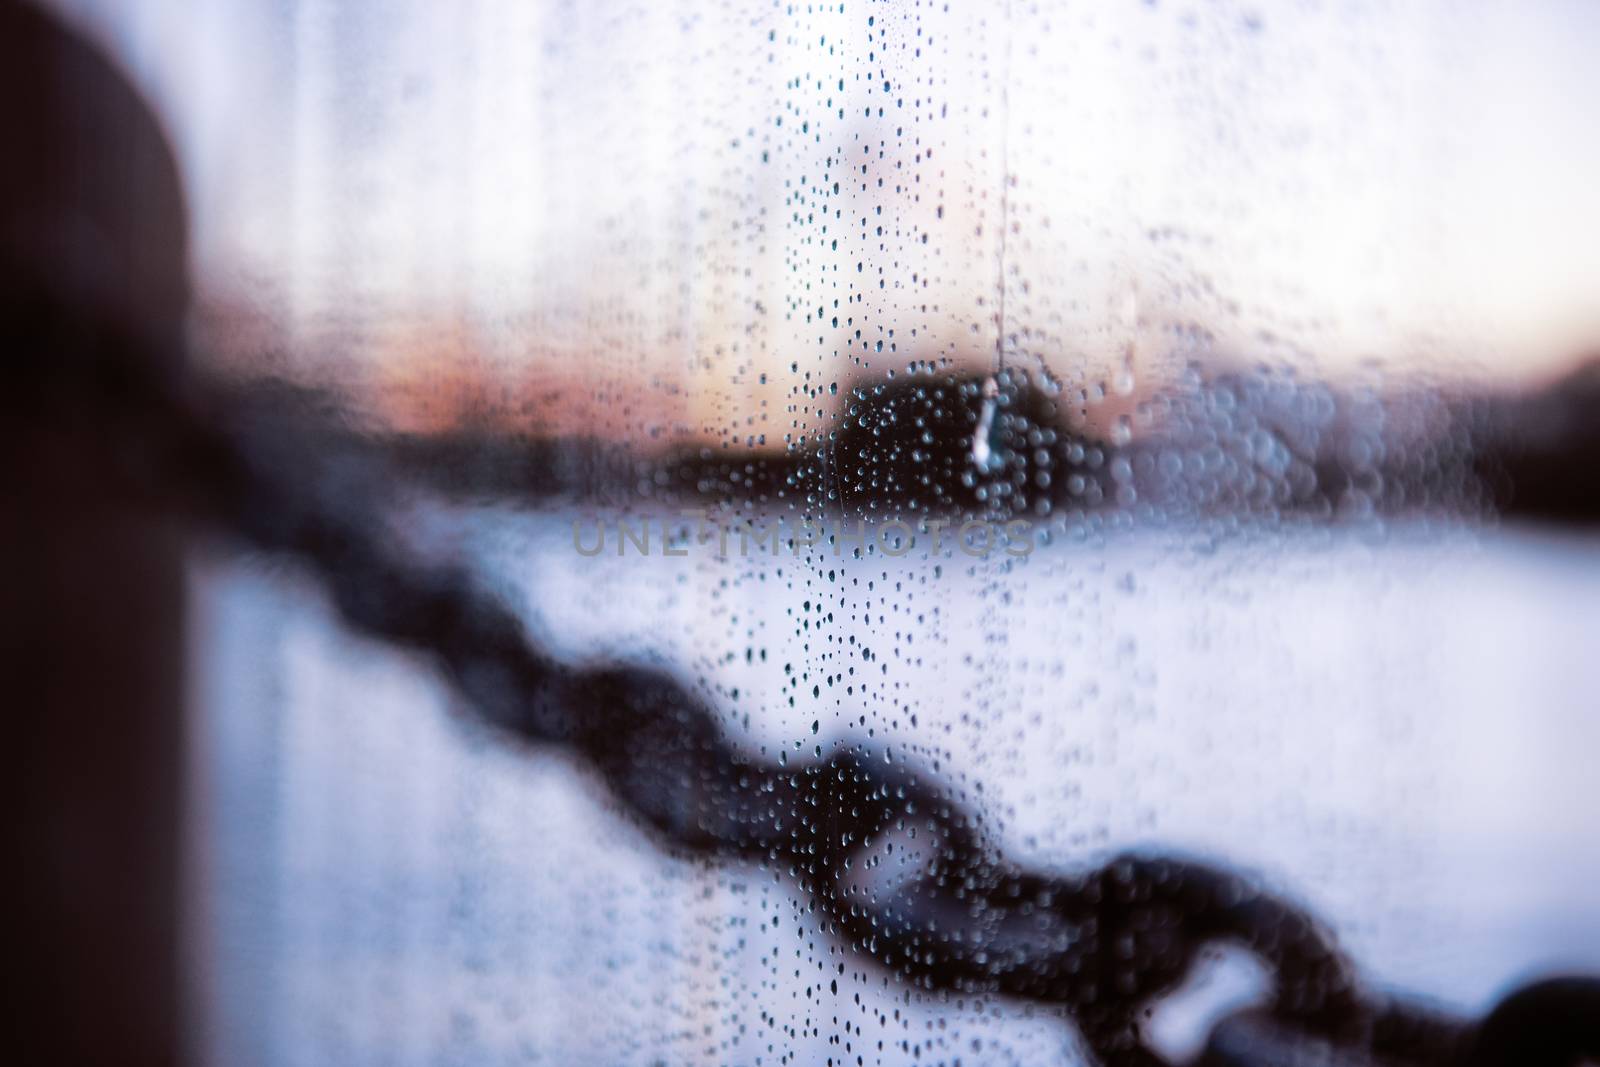 Rain drops on glass by artistrobd